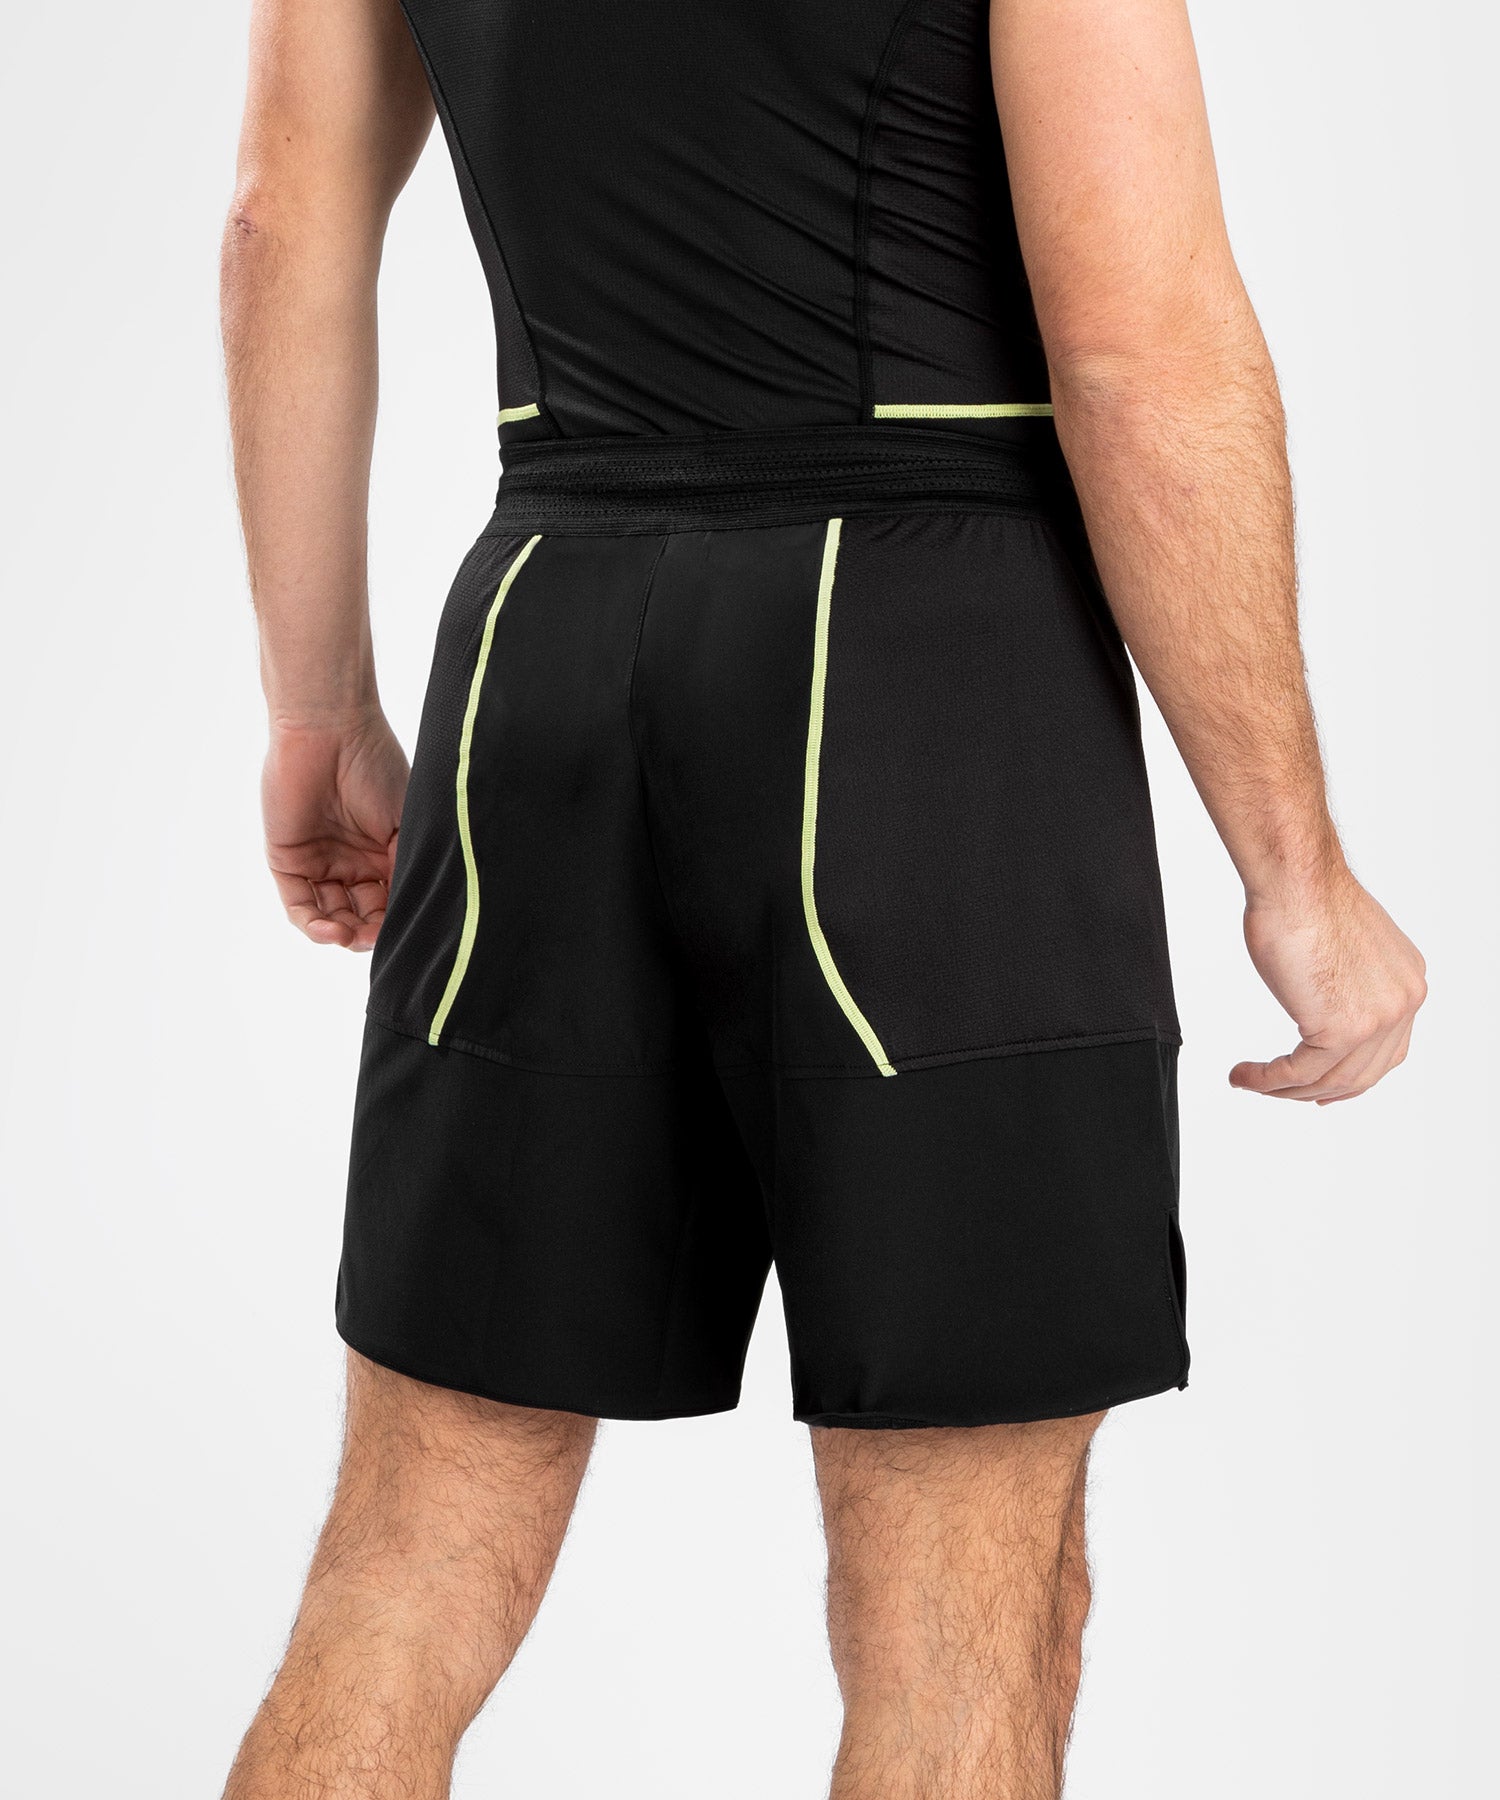 Pantalones cortos de boxeo 2 en 1 con abertura lateral Active Man